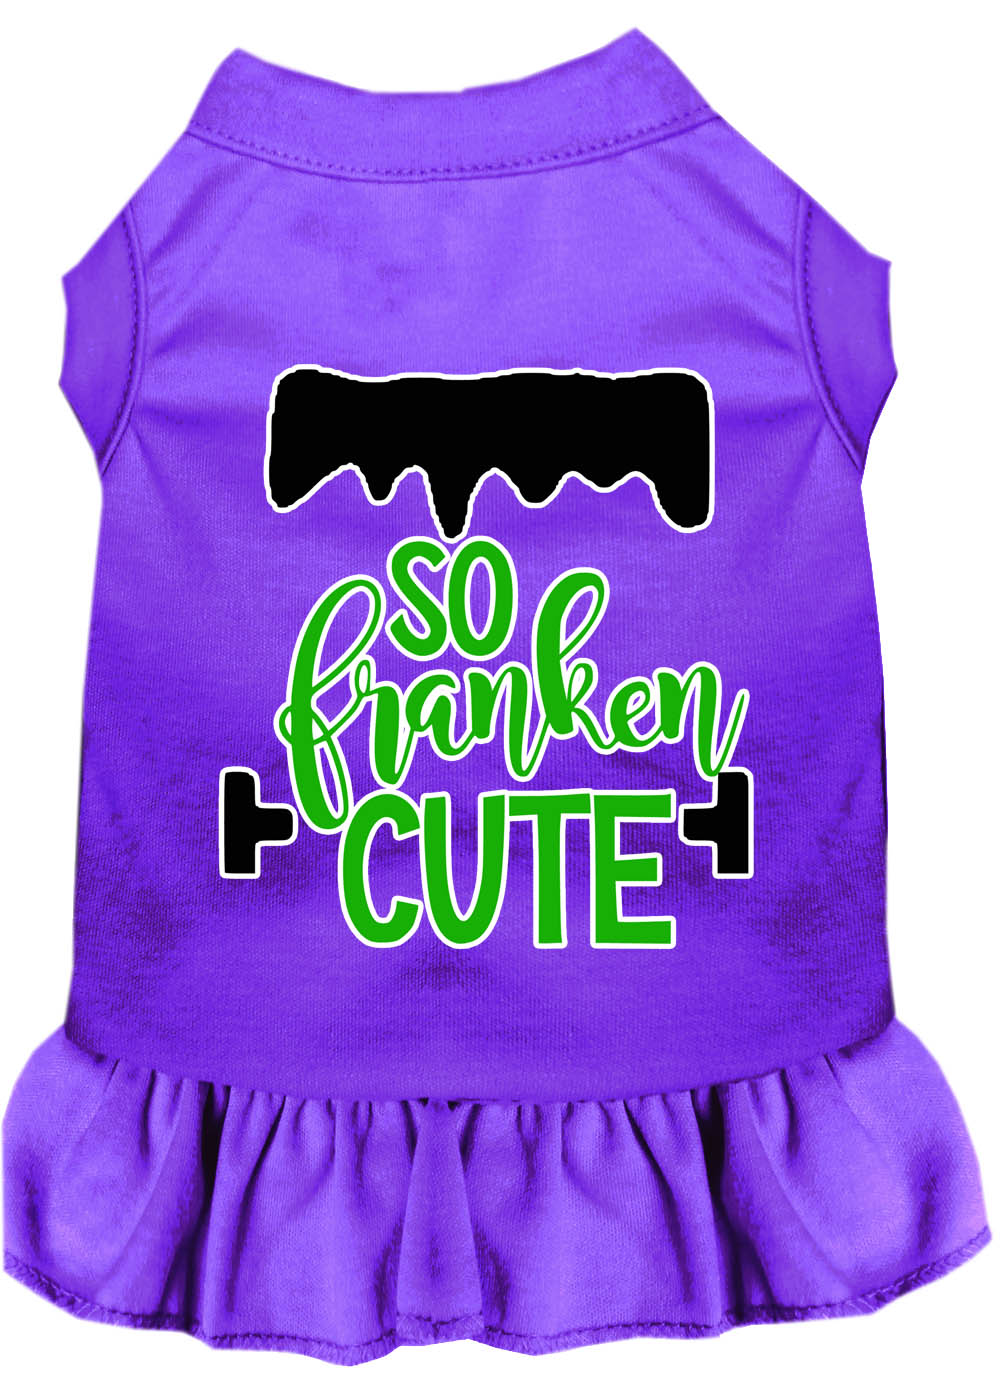 So Franken Cute Screen Print Dog Dress Purple Sm